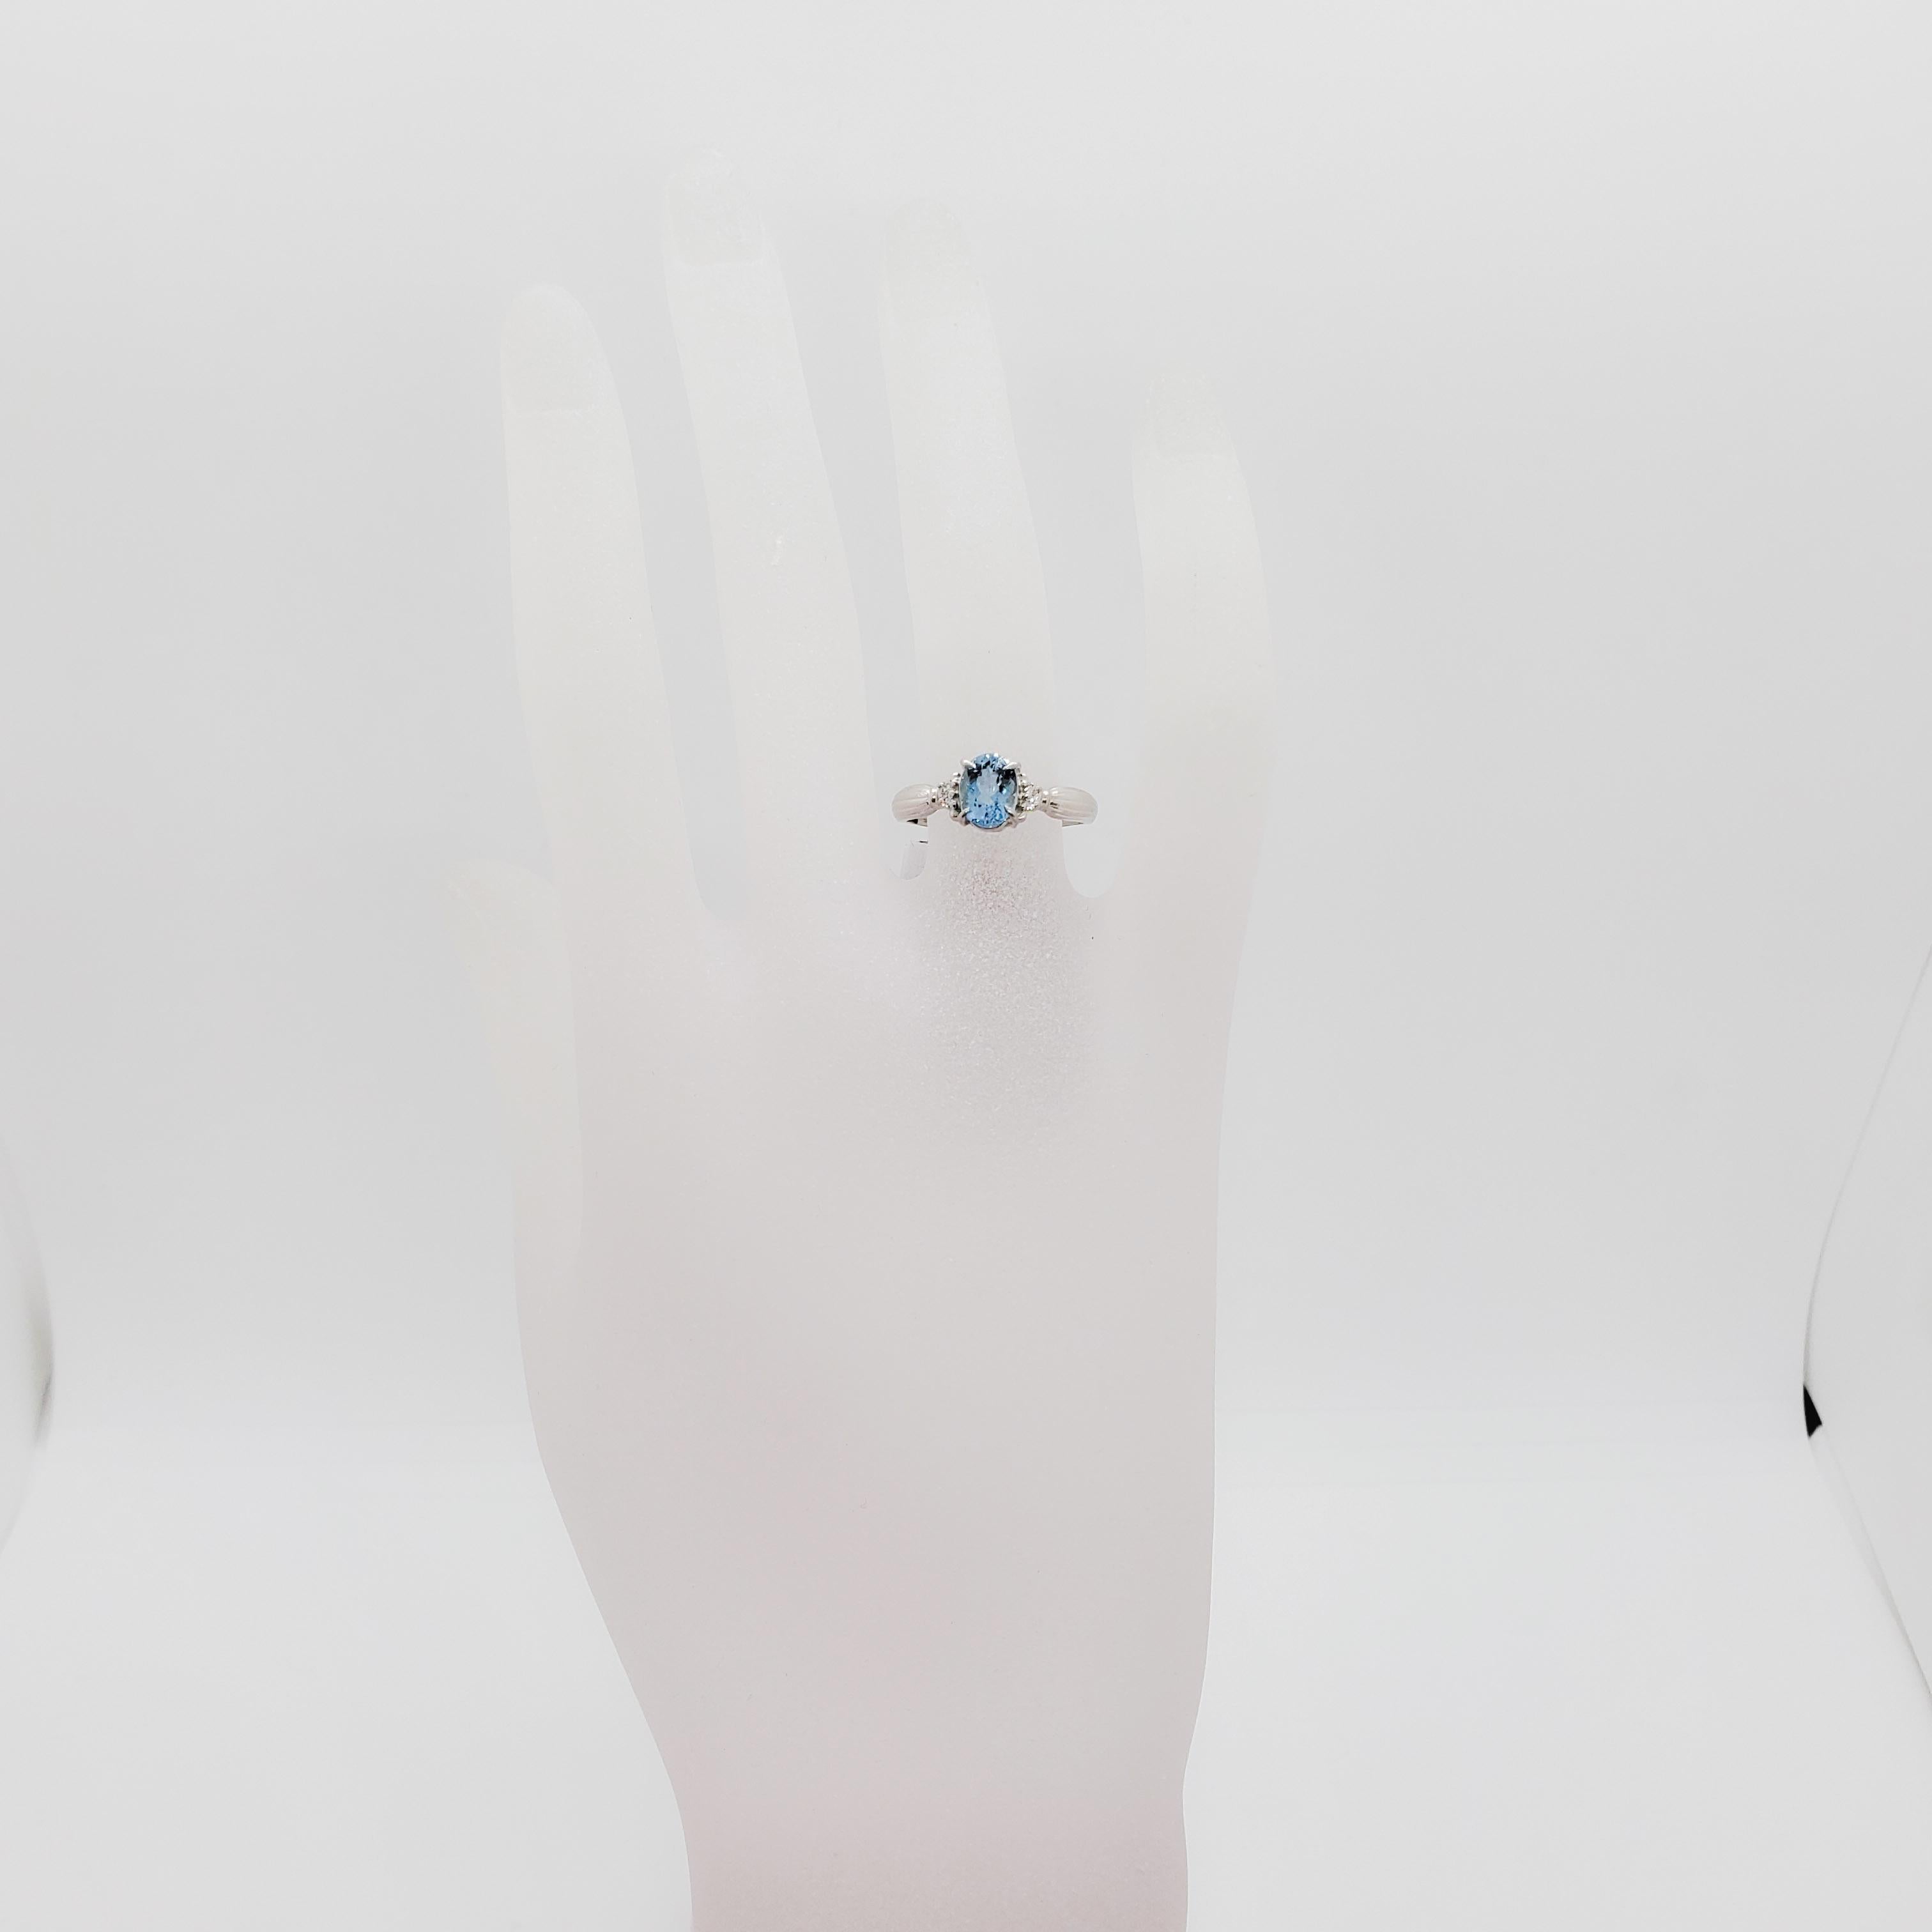 Beautiful 0.90 ct. aquamarine oval with 0.04 ct. of white diamond rounds.  Handmade platinum mounting.  Ring size 5.75.  